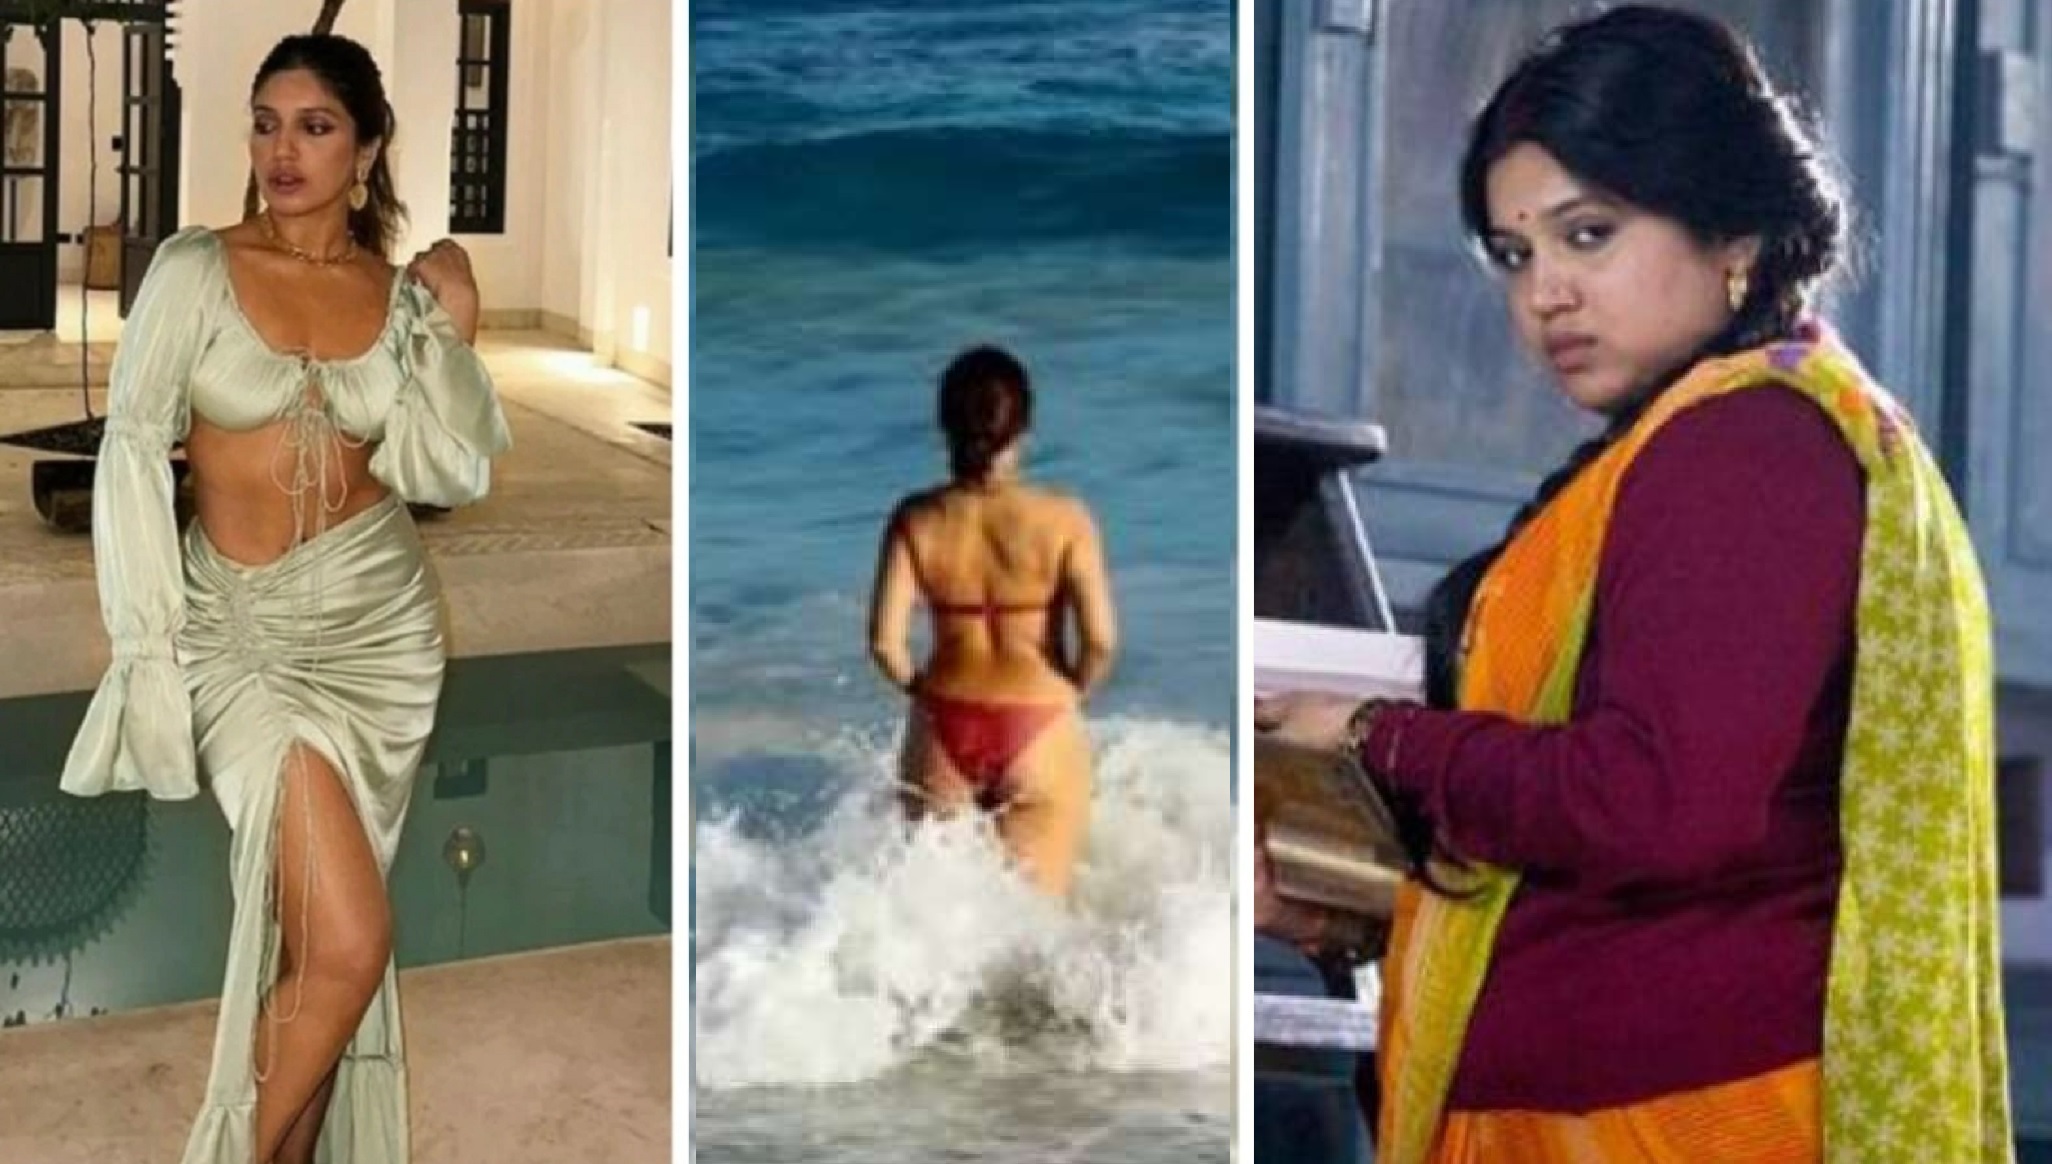 Bhumi Pednekar Flaunts Her Bikini Body In New Video, Fans Say: ‘What A Transformation’